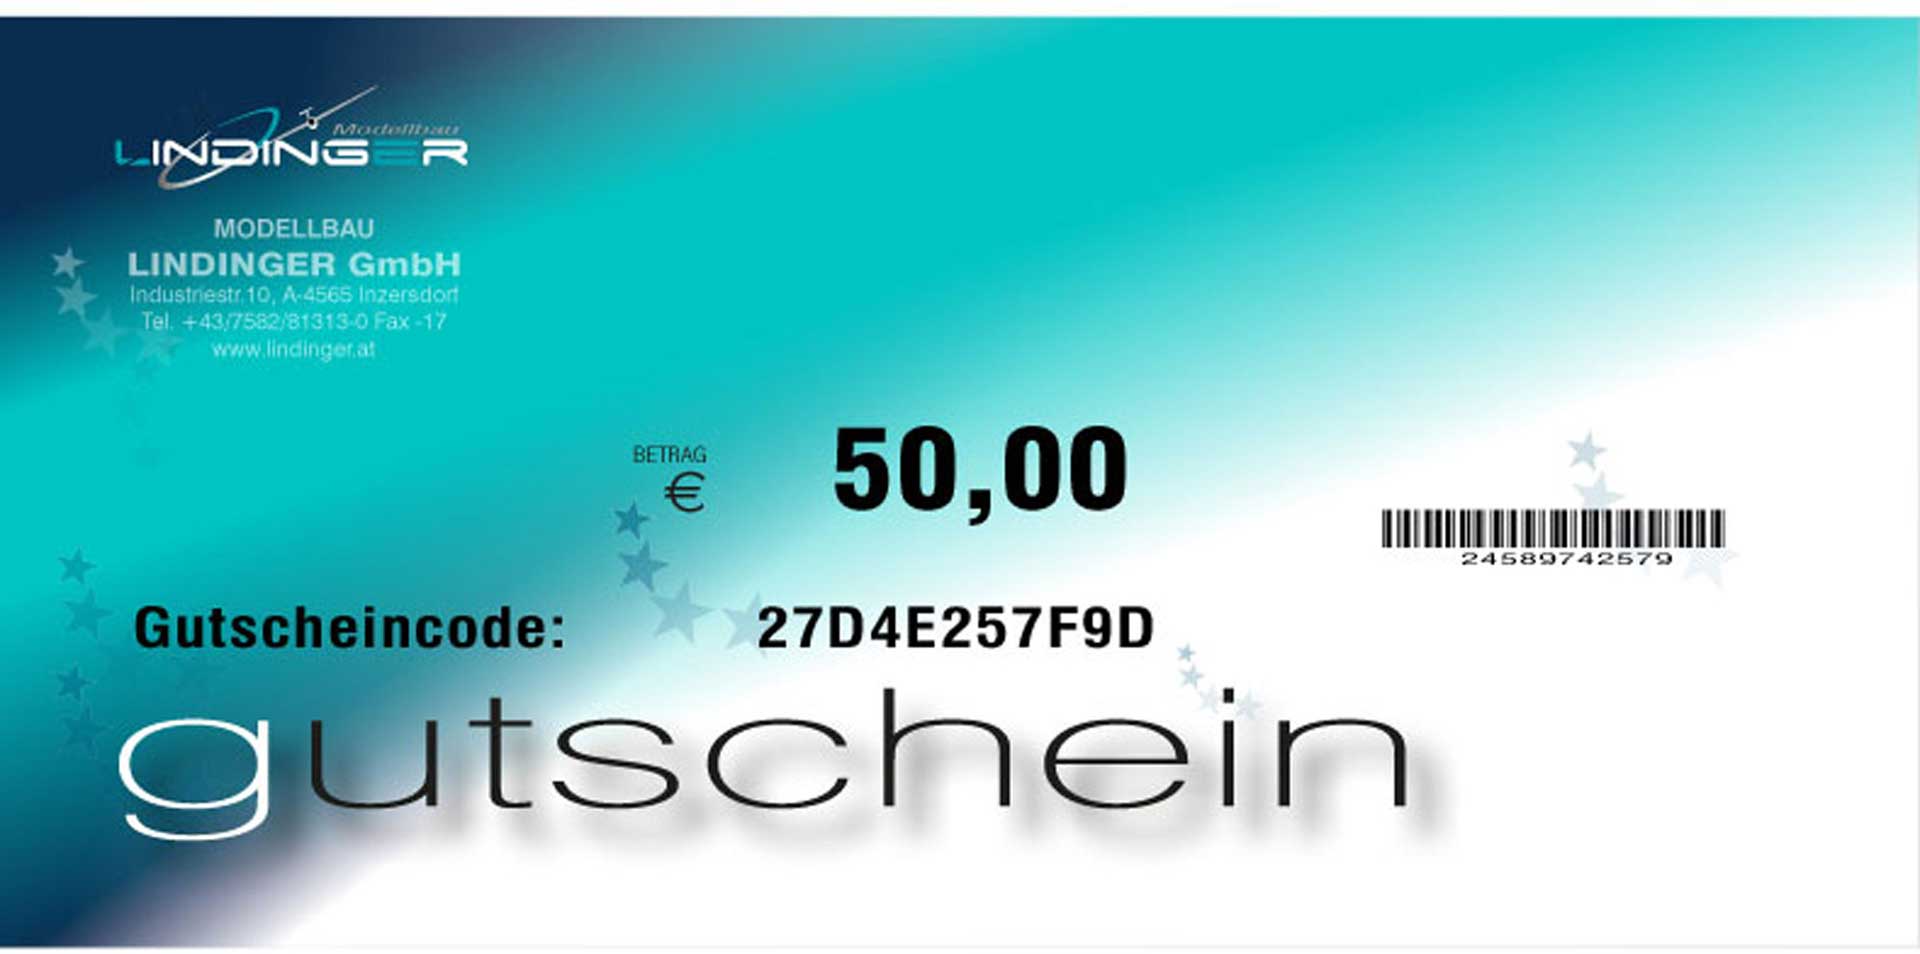 MODELLBAU LINDINGER GUTSCHEIN LINDINGER 50,- EURO PDF per E-MAIL